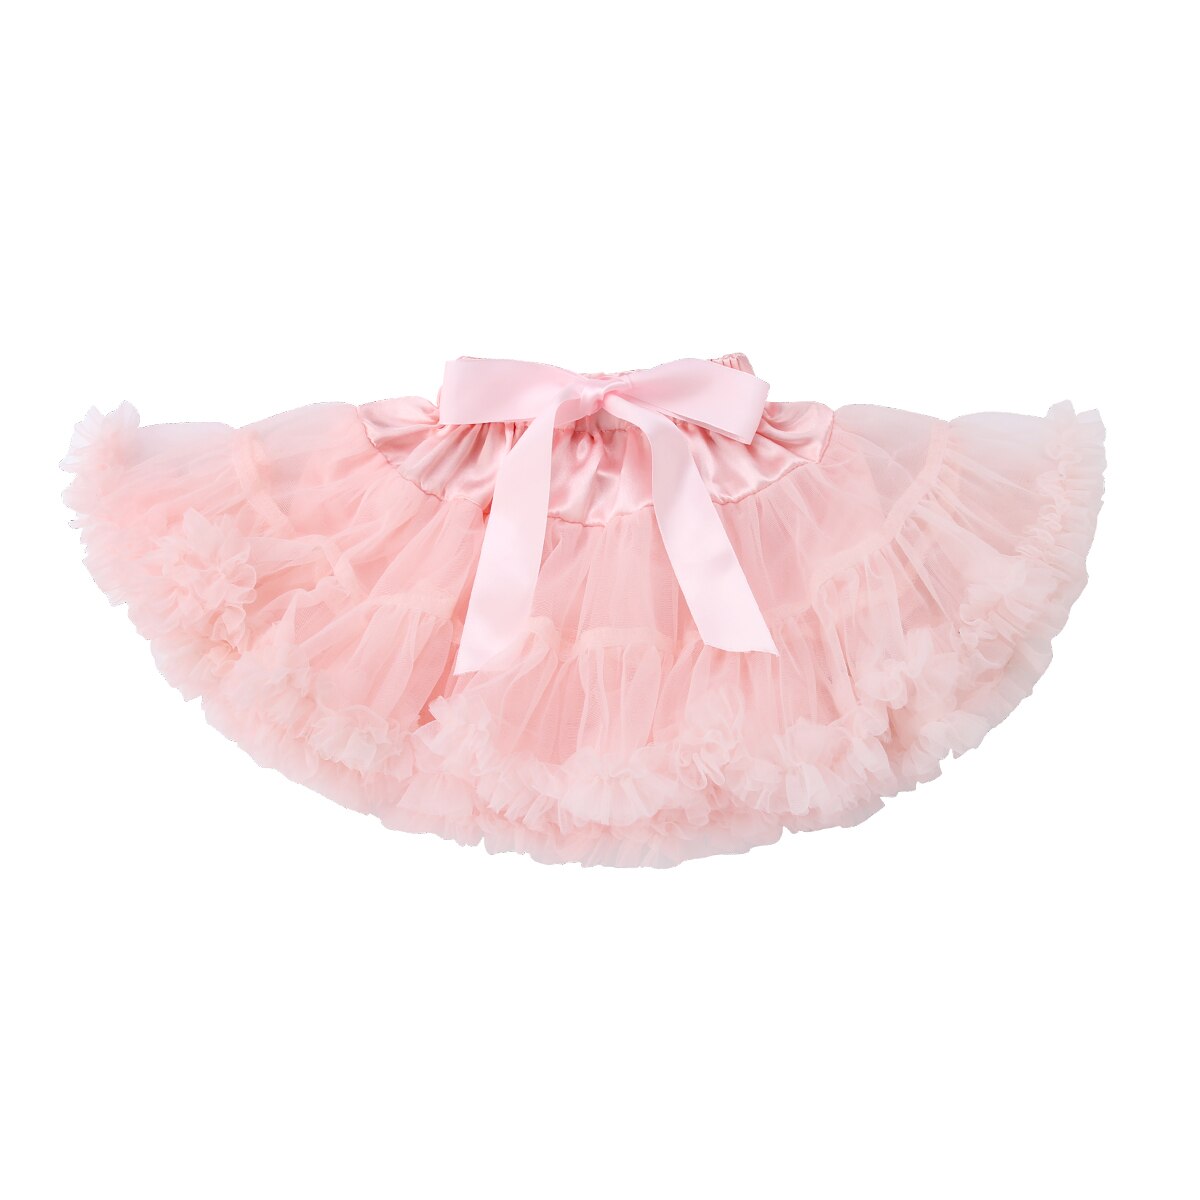 Baby børn piger sommer fluffy tutu kjole nederdel prinsesse fødselsdagsfest underkjole ballet dancewear nederdel 0-24m: Brun